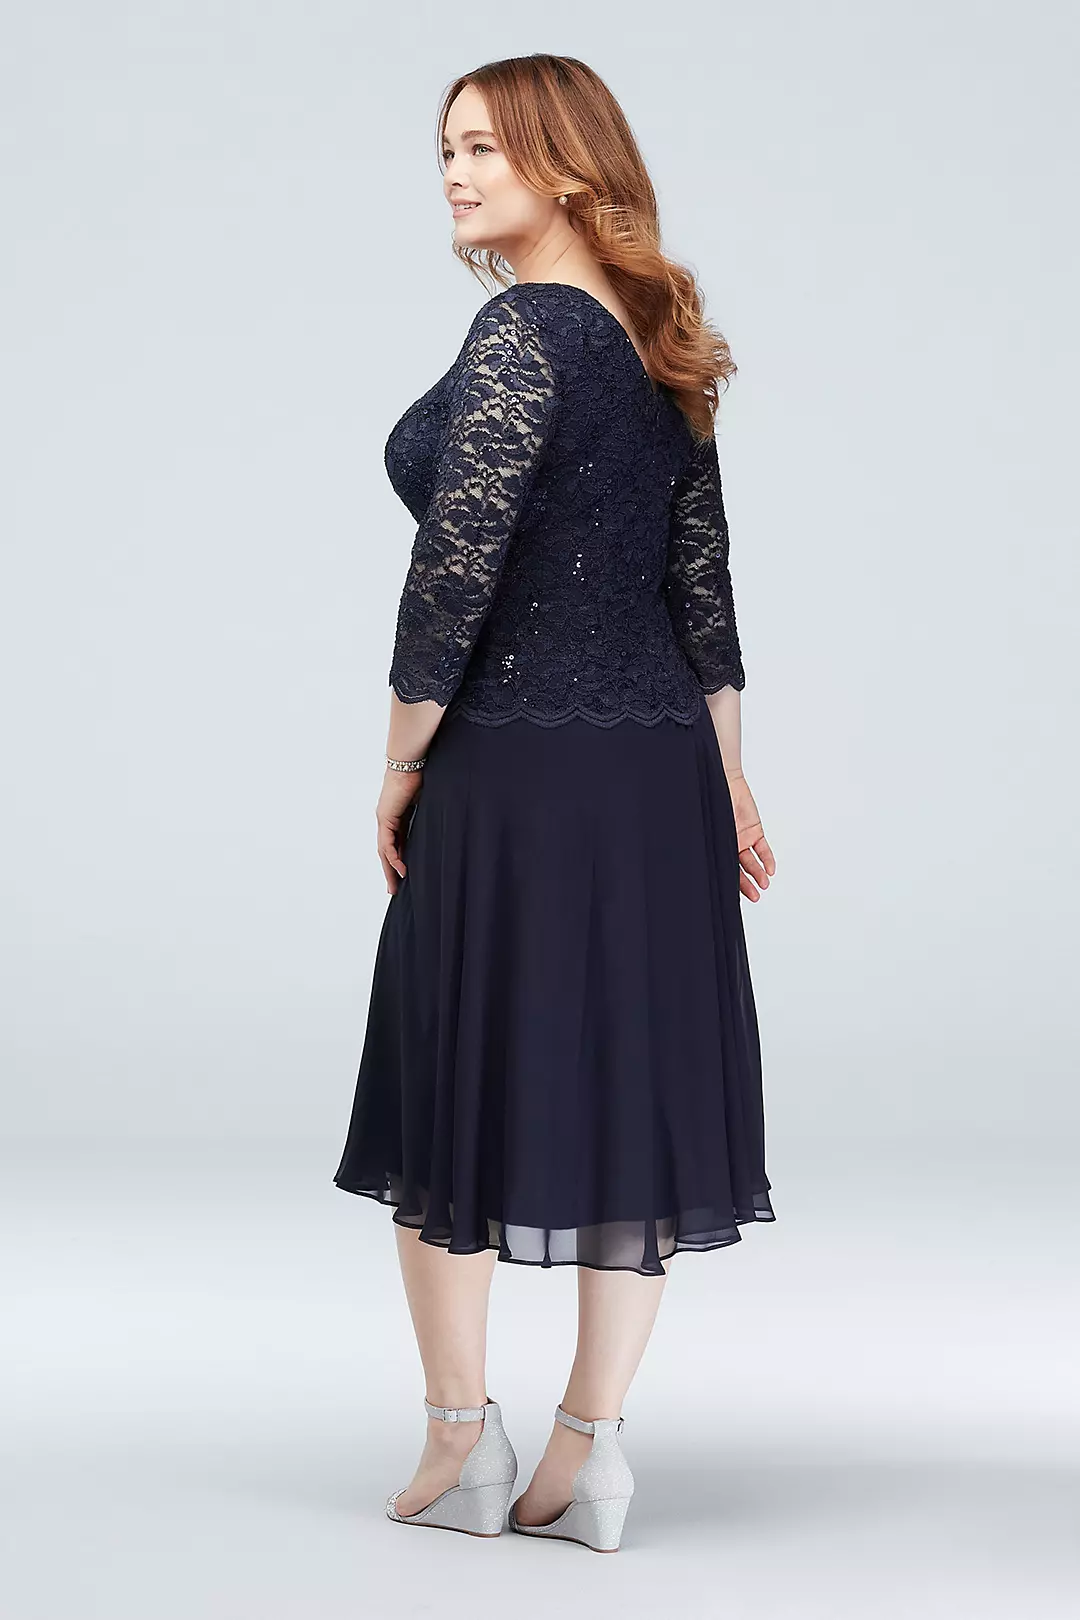 V-Back Scoopneck Plus Size Dress with 3/4 Sleeves Image 2